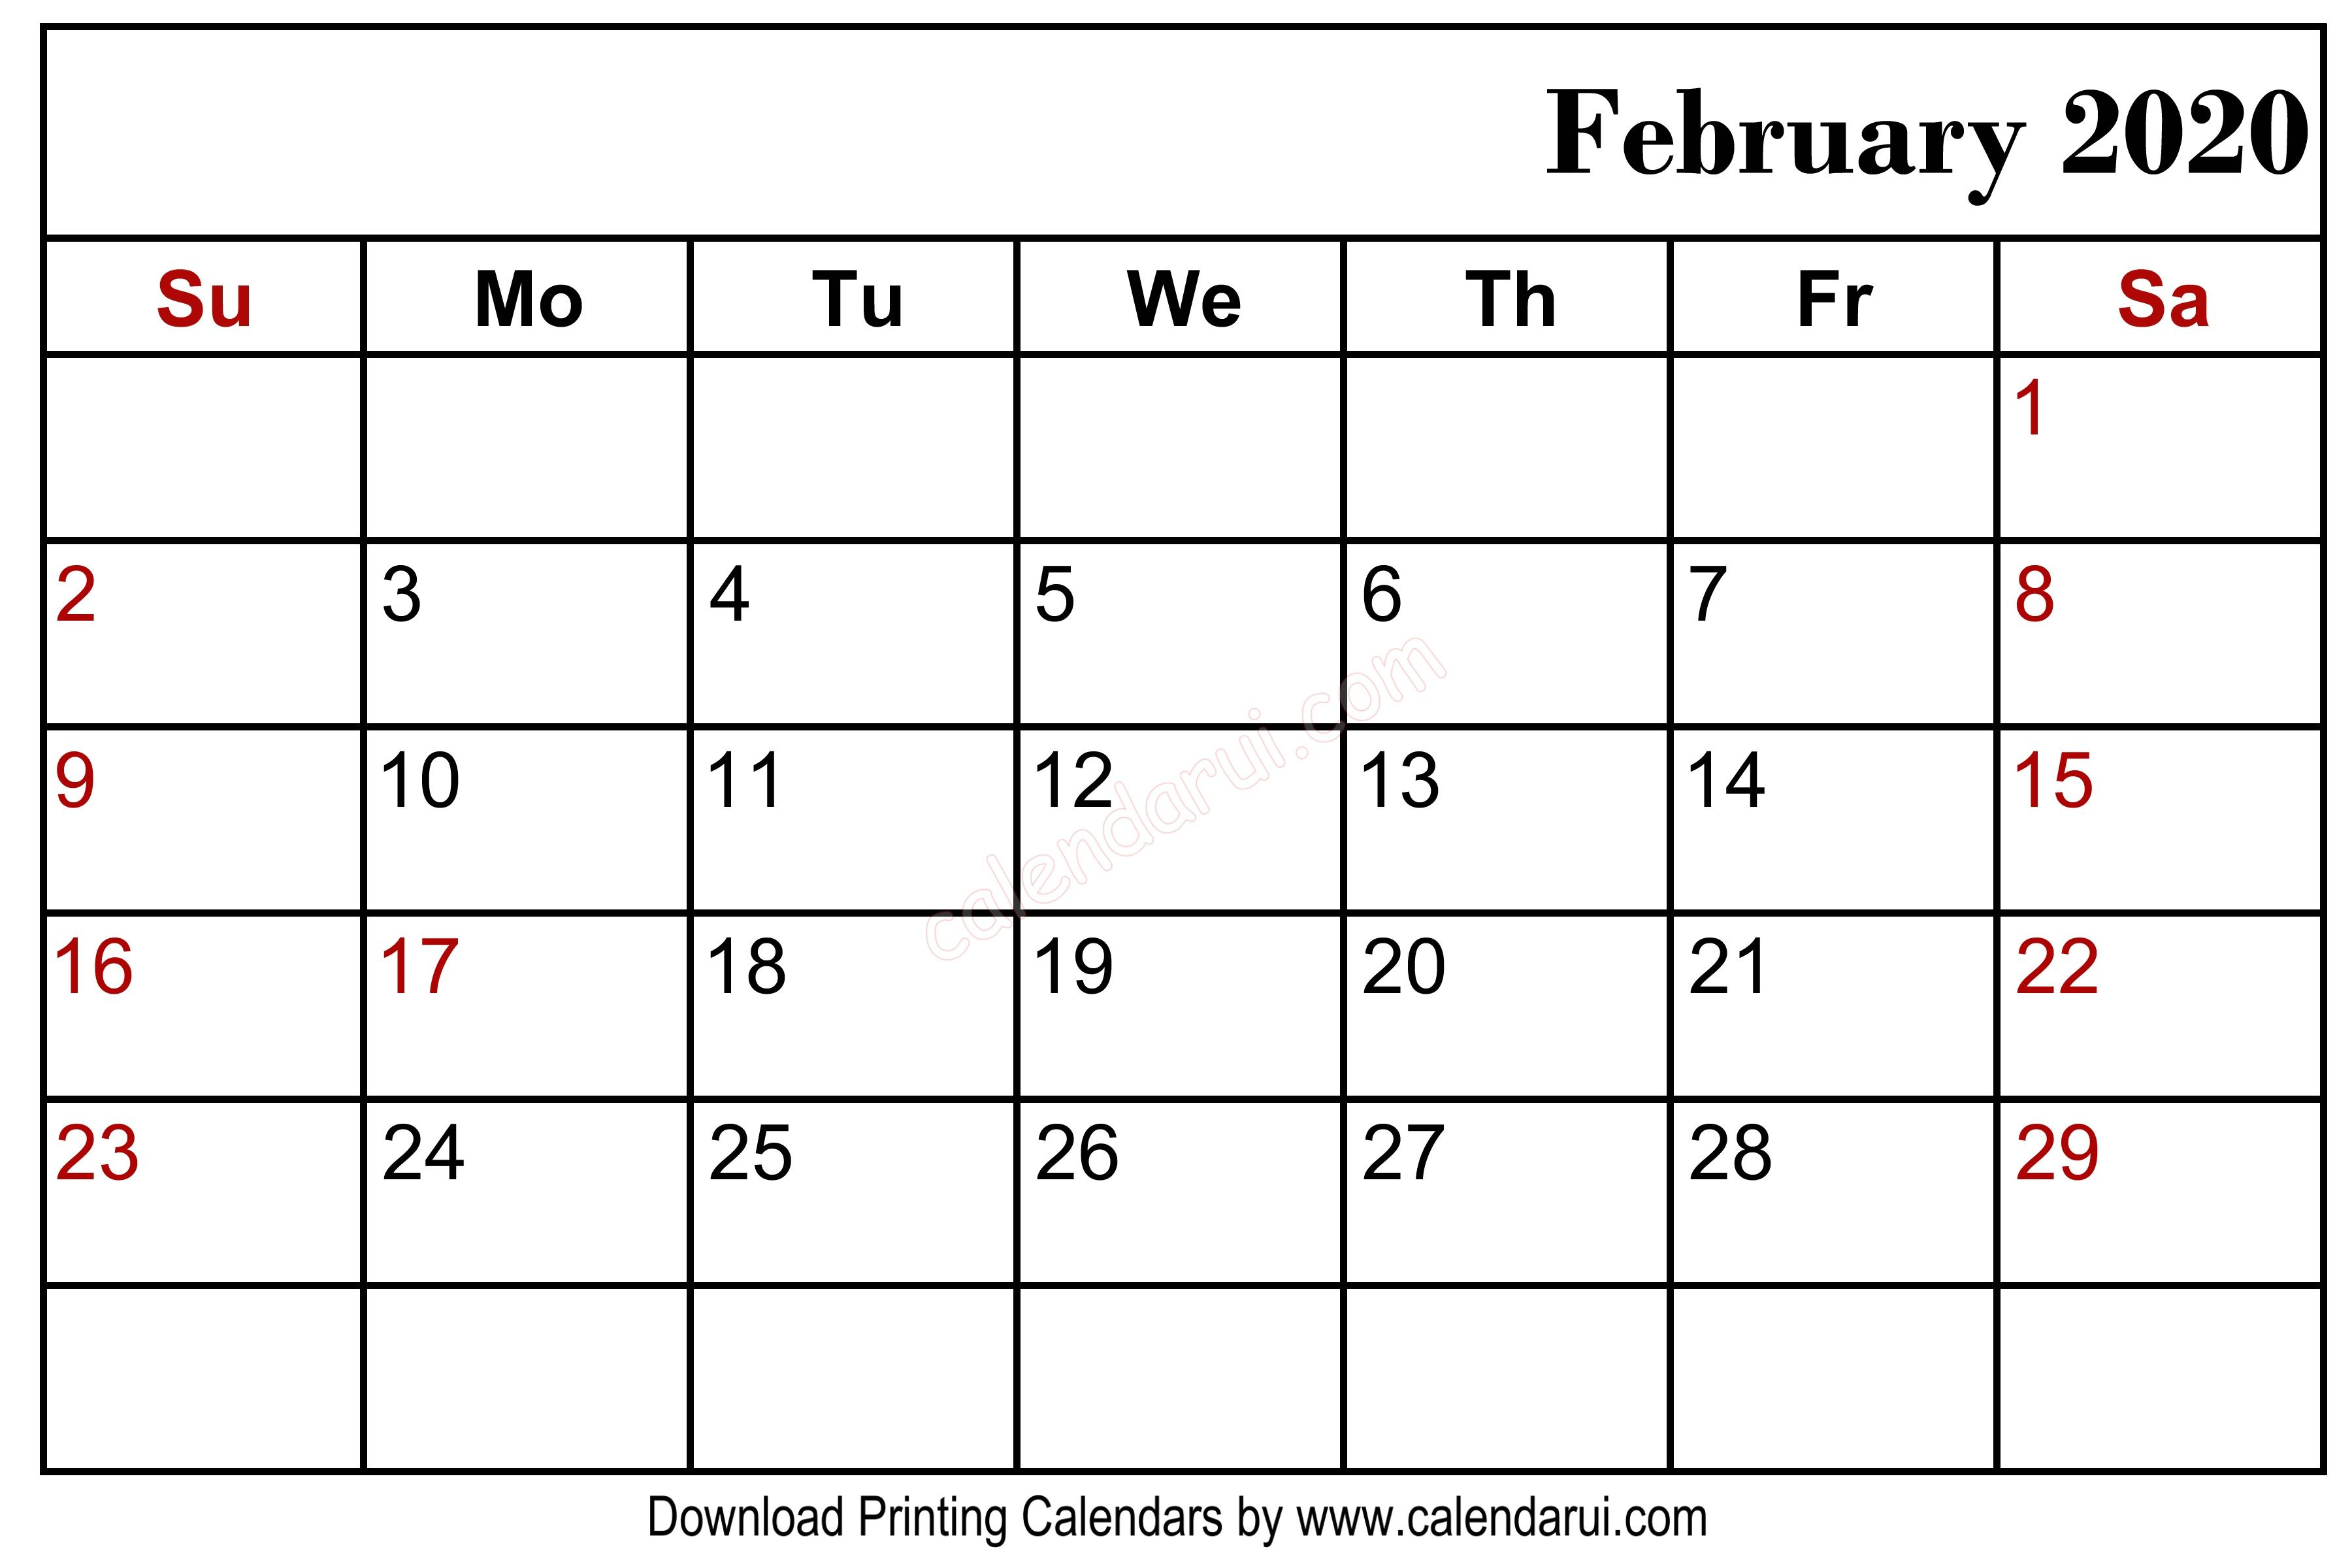 February 2020 Blank Calendar Printable Right | Blank in February 2020 Daily Calendar